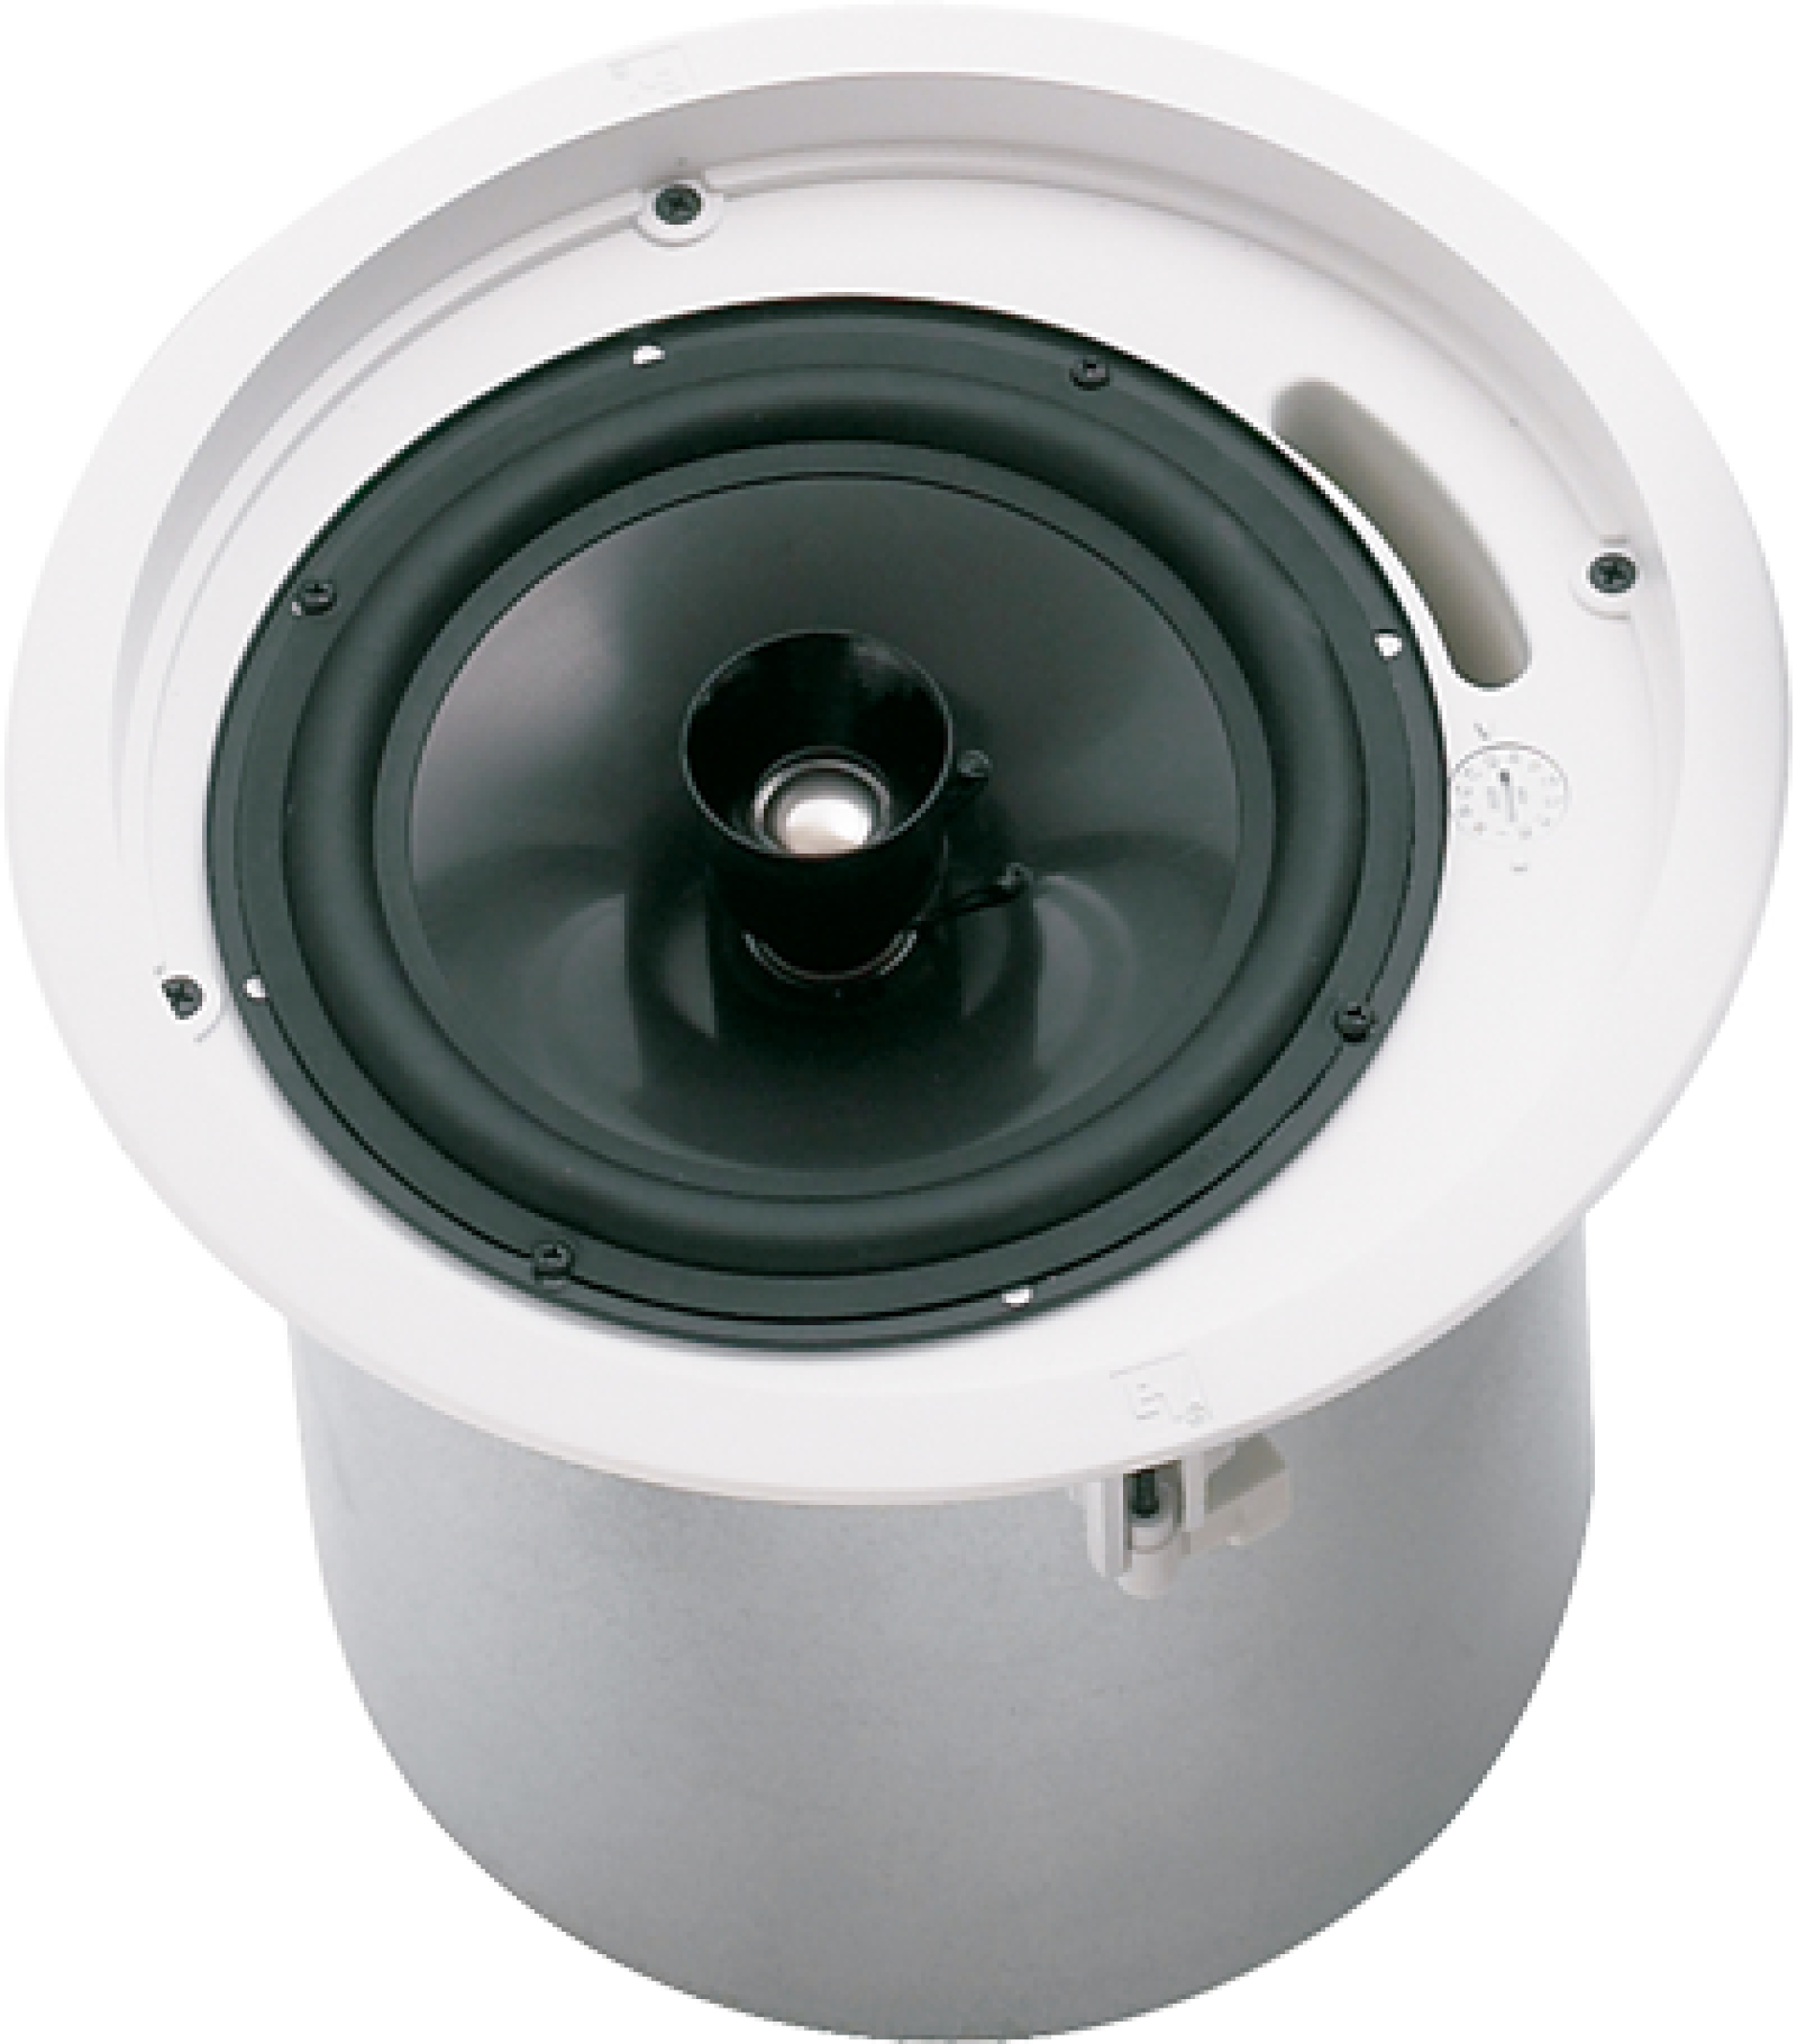 EVID ceiling mount speakers